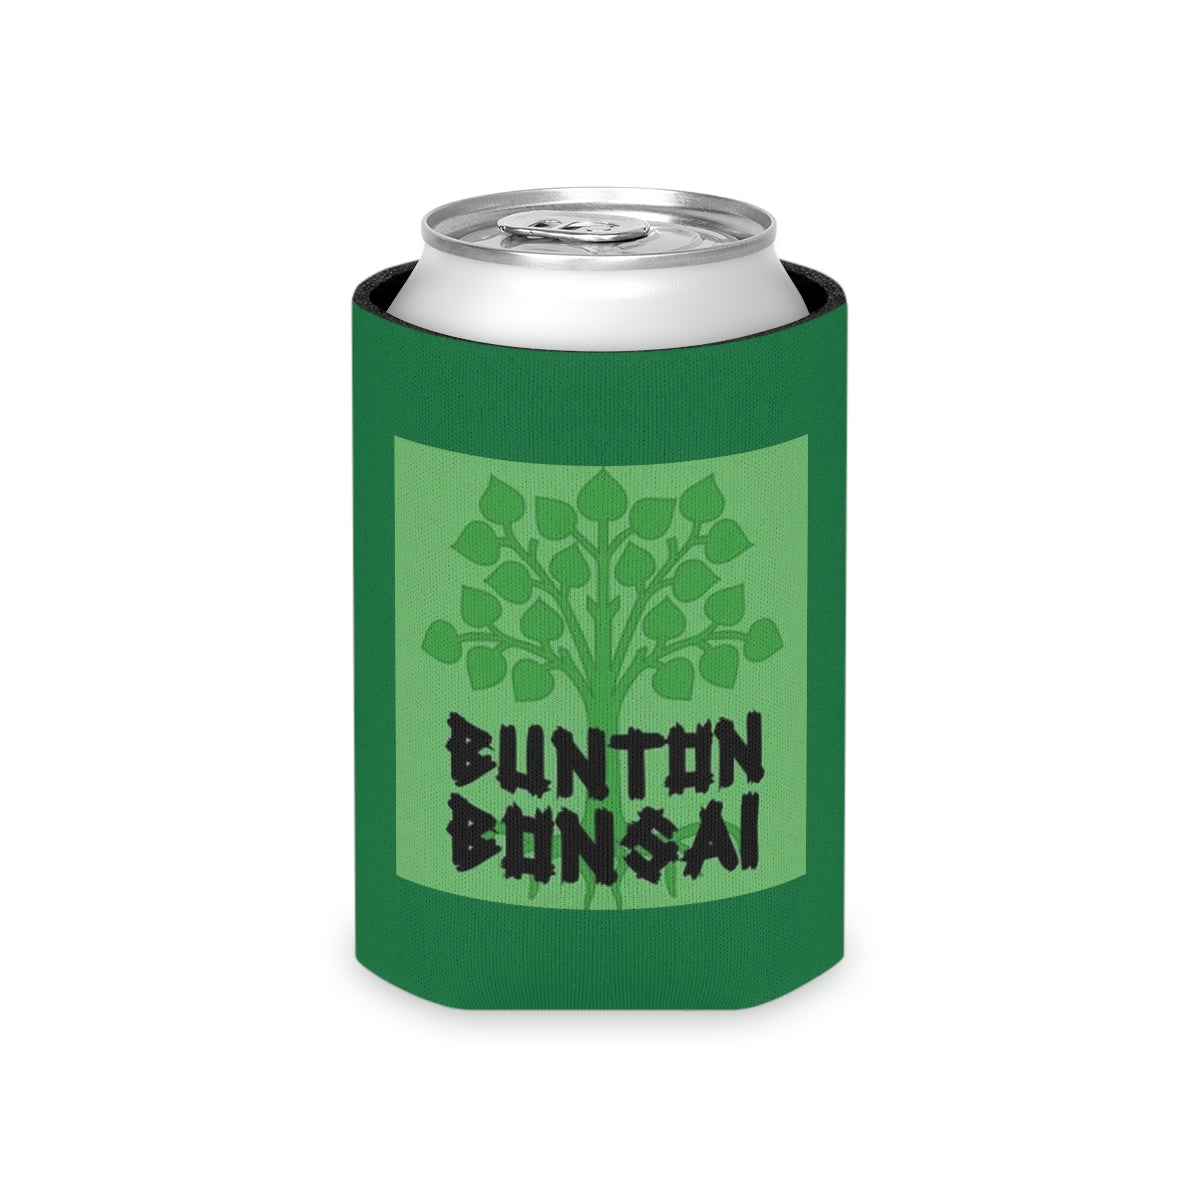 Bunton Bonsai Drink Can Coozie